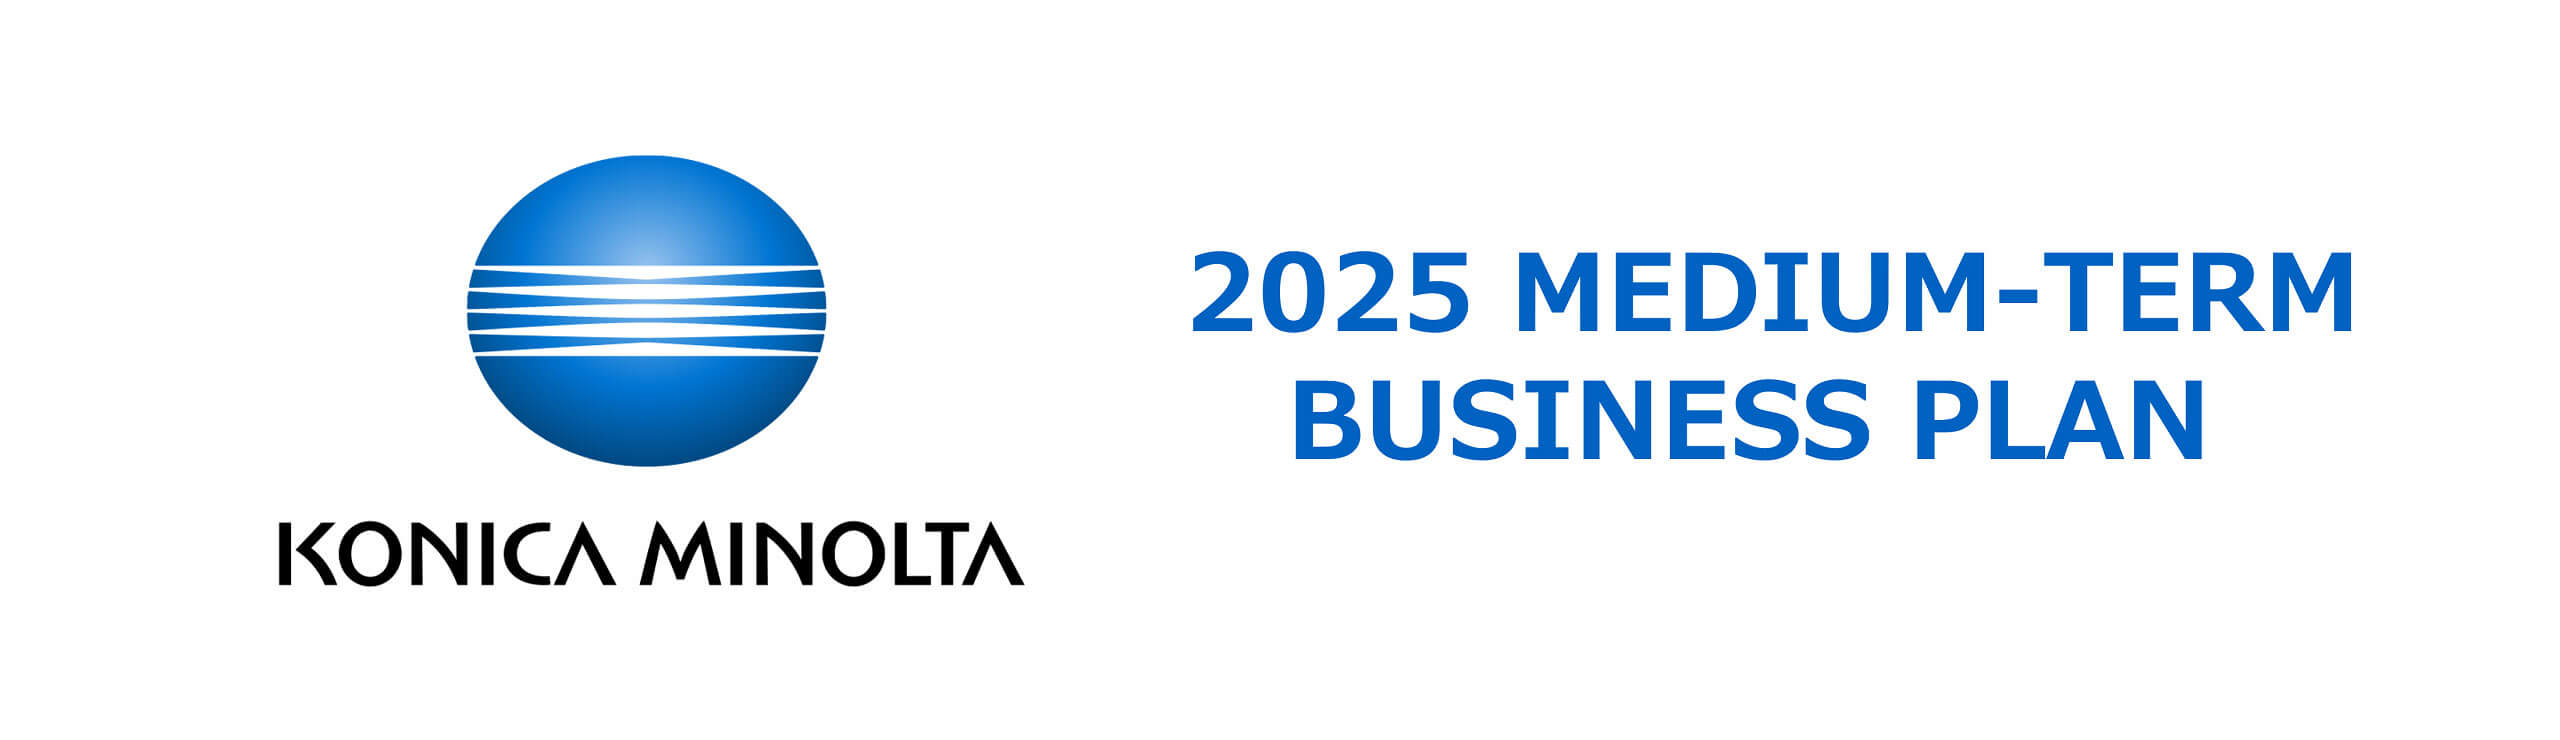 2025 Medium-Term Business Plan.